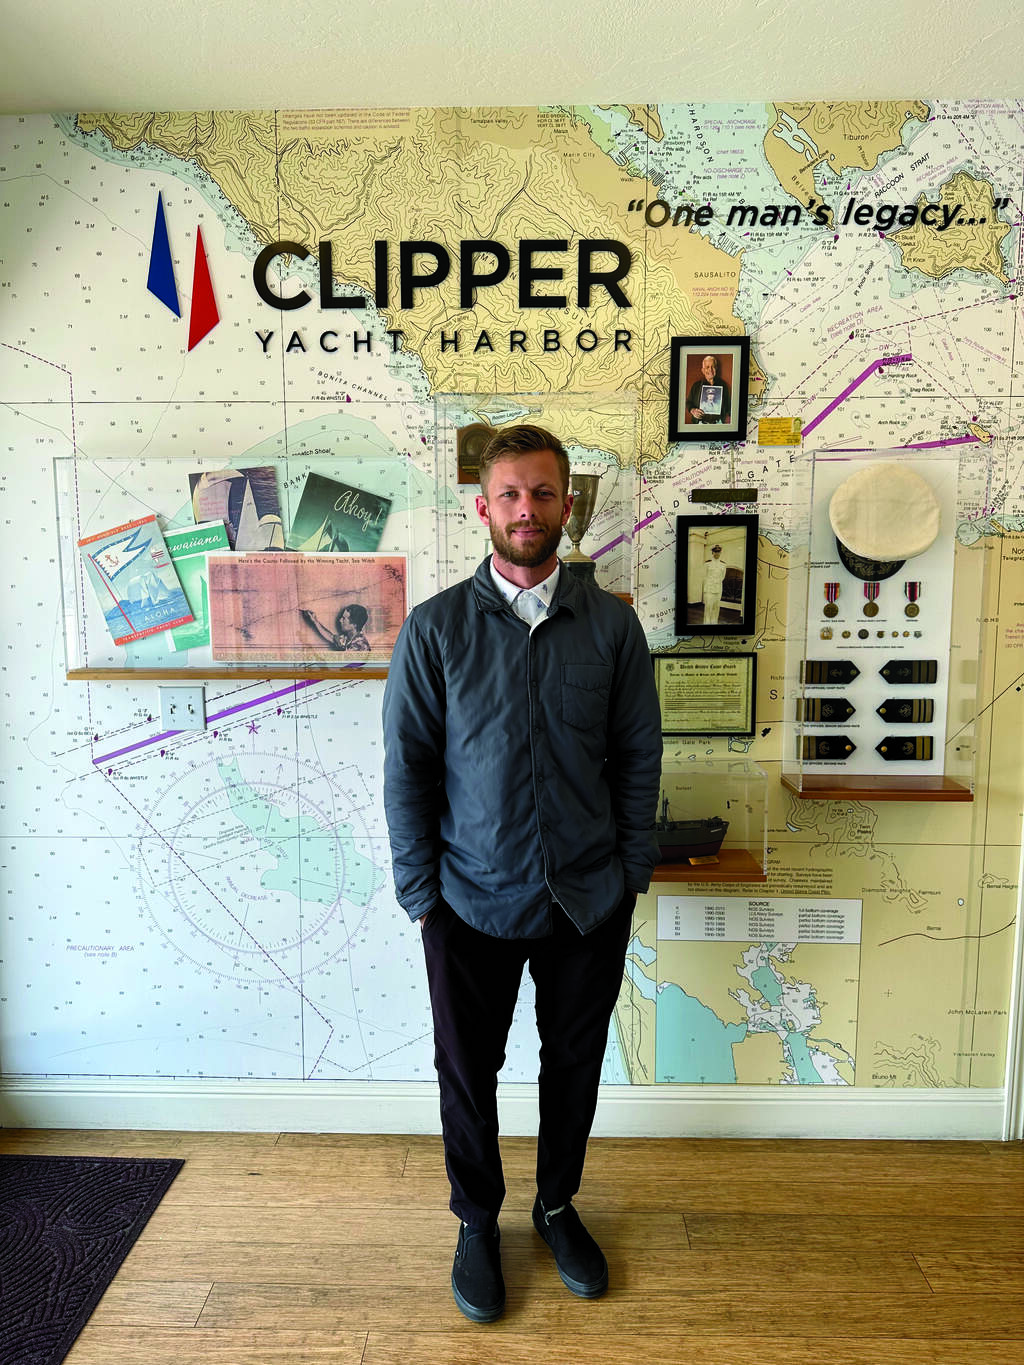 KC Pedersen in yacht harbor office